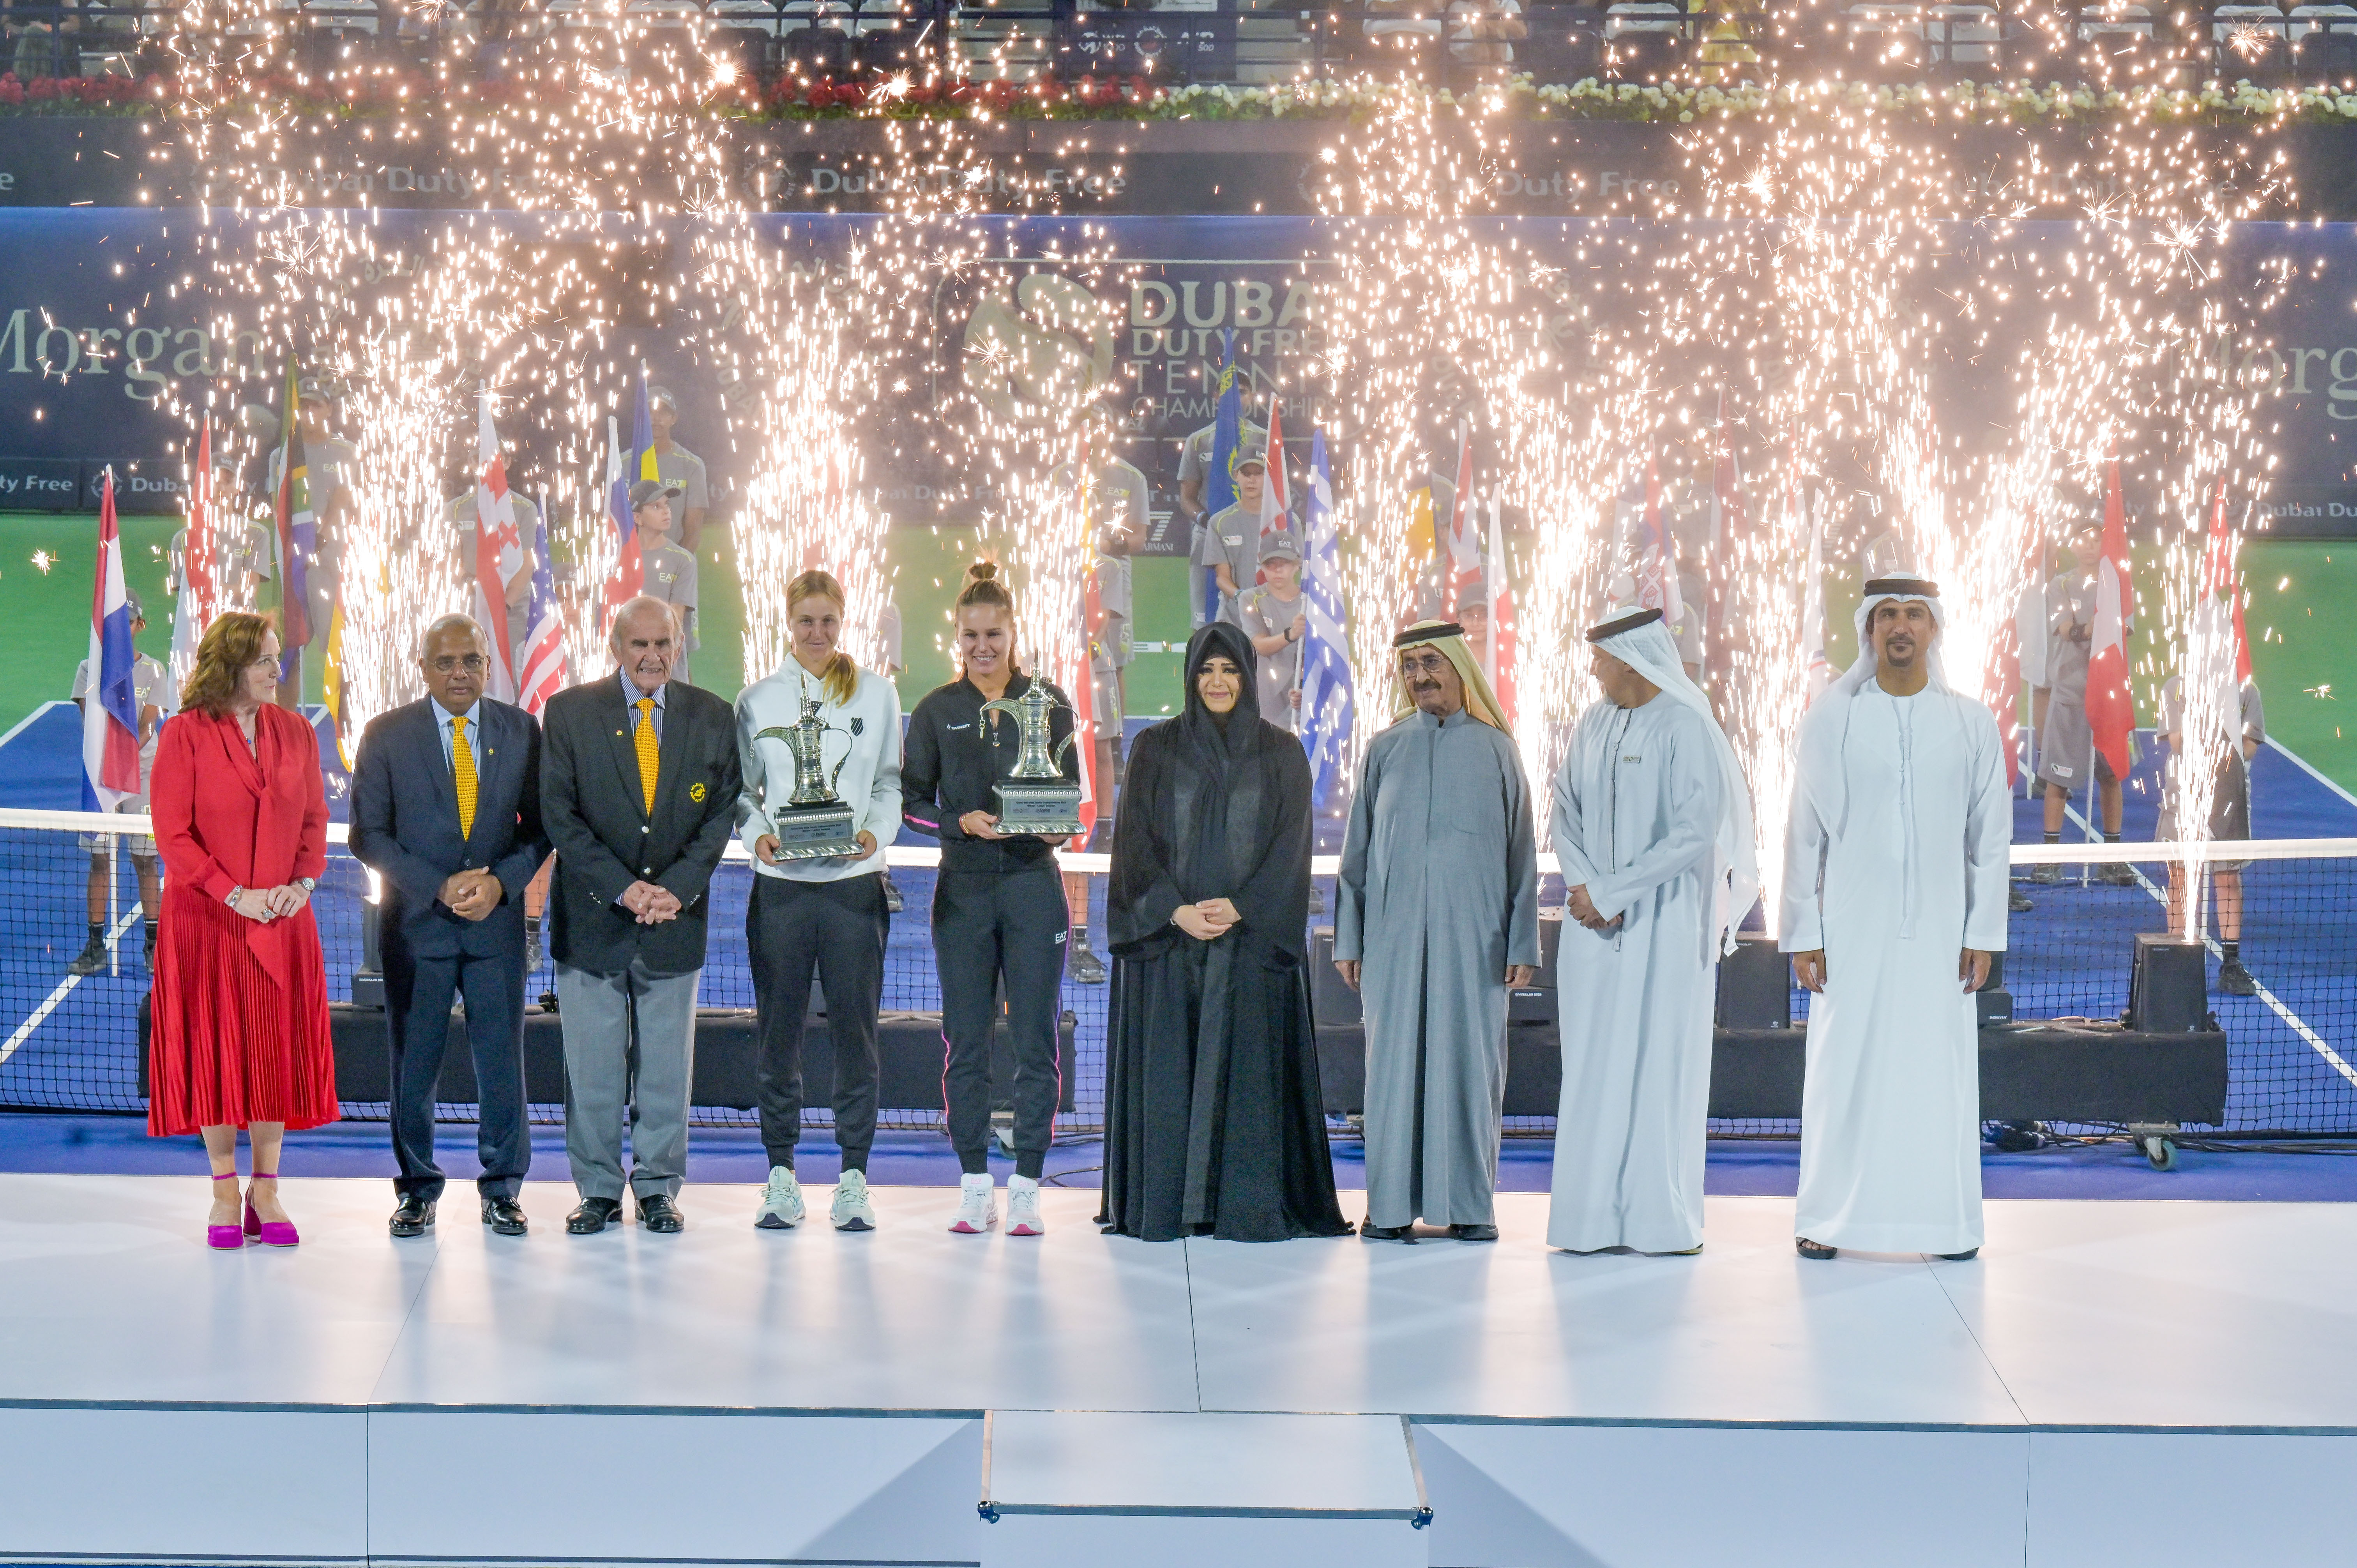 Dubai Duty Free Tennis celebrates WTA's 50th anniversary